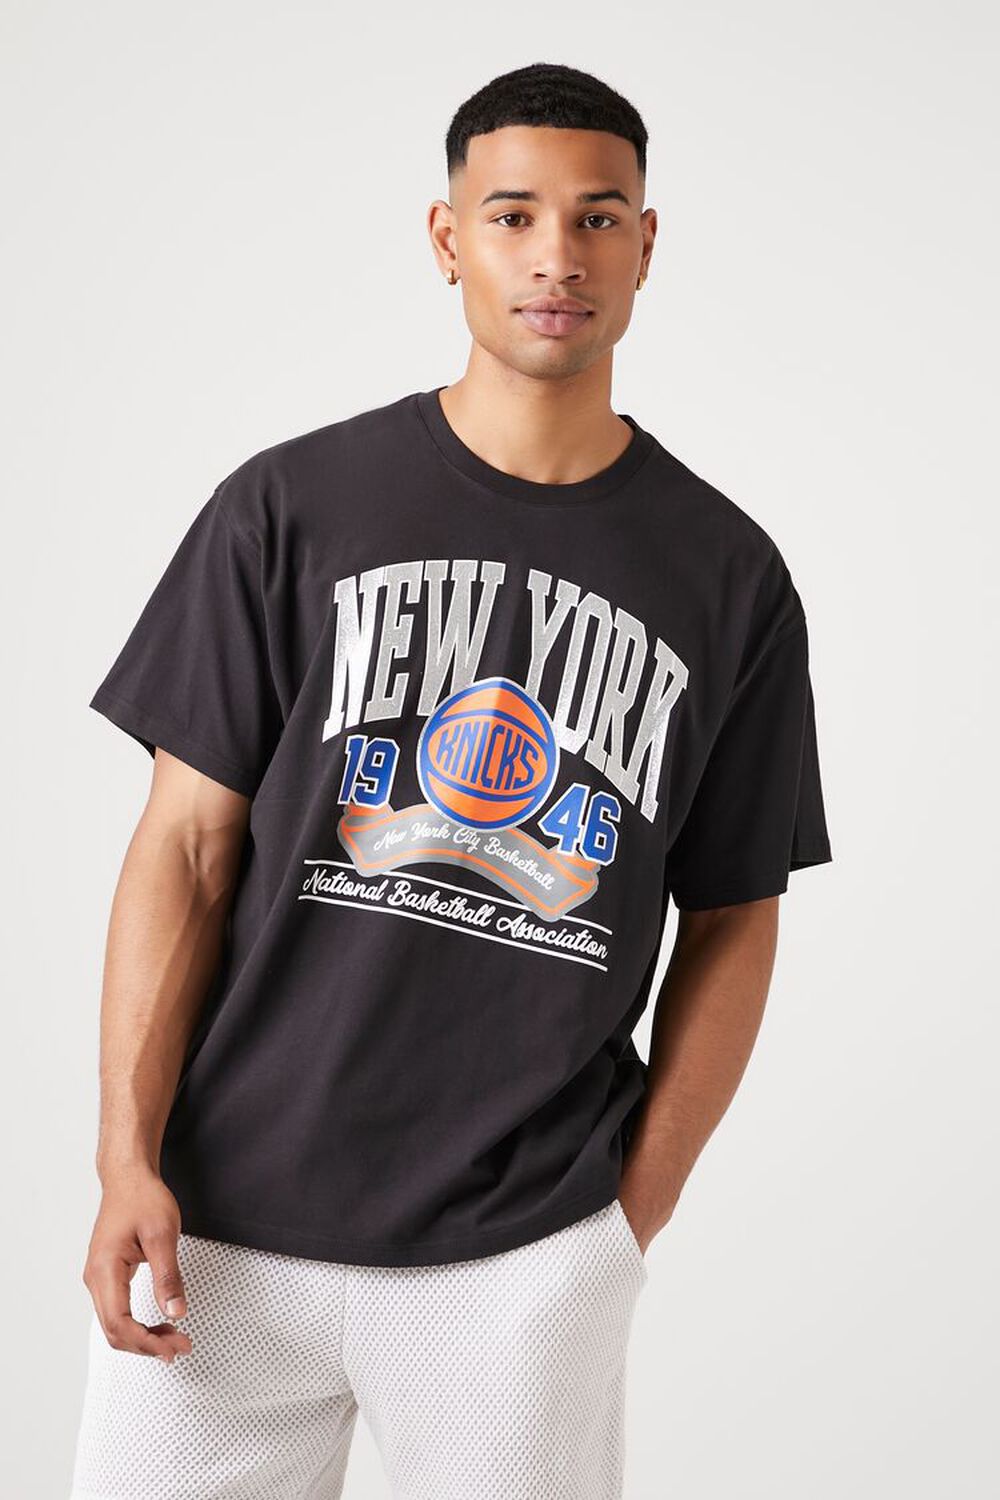 New York Knicks Nba X Staple Home Team T-Shirt, hoodie, longsleeve